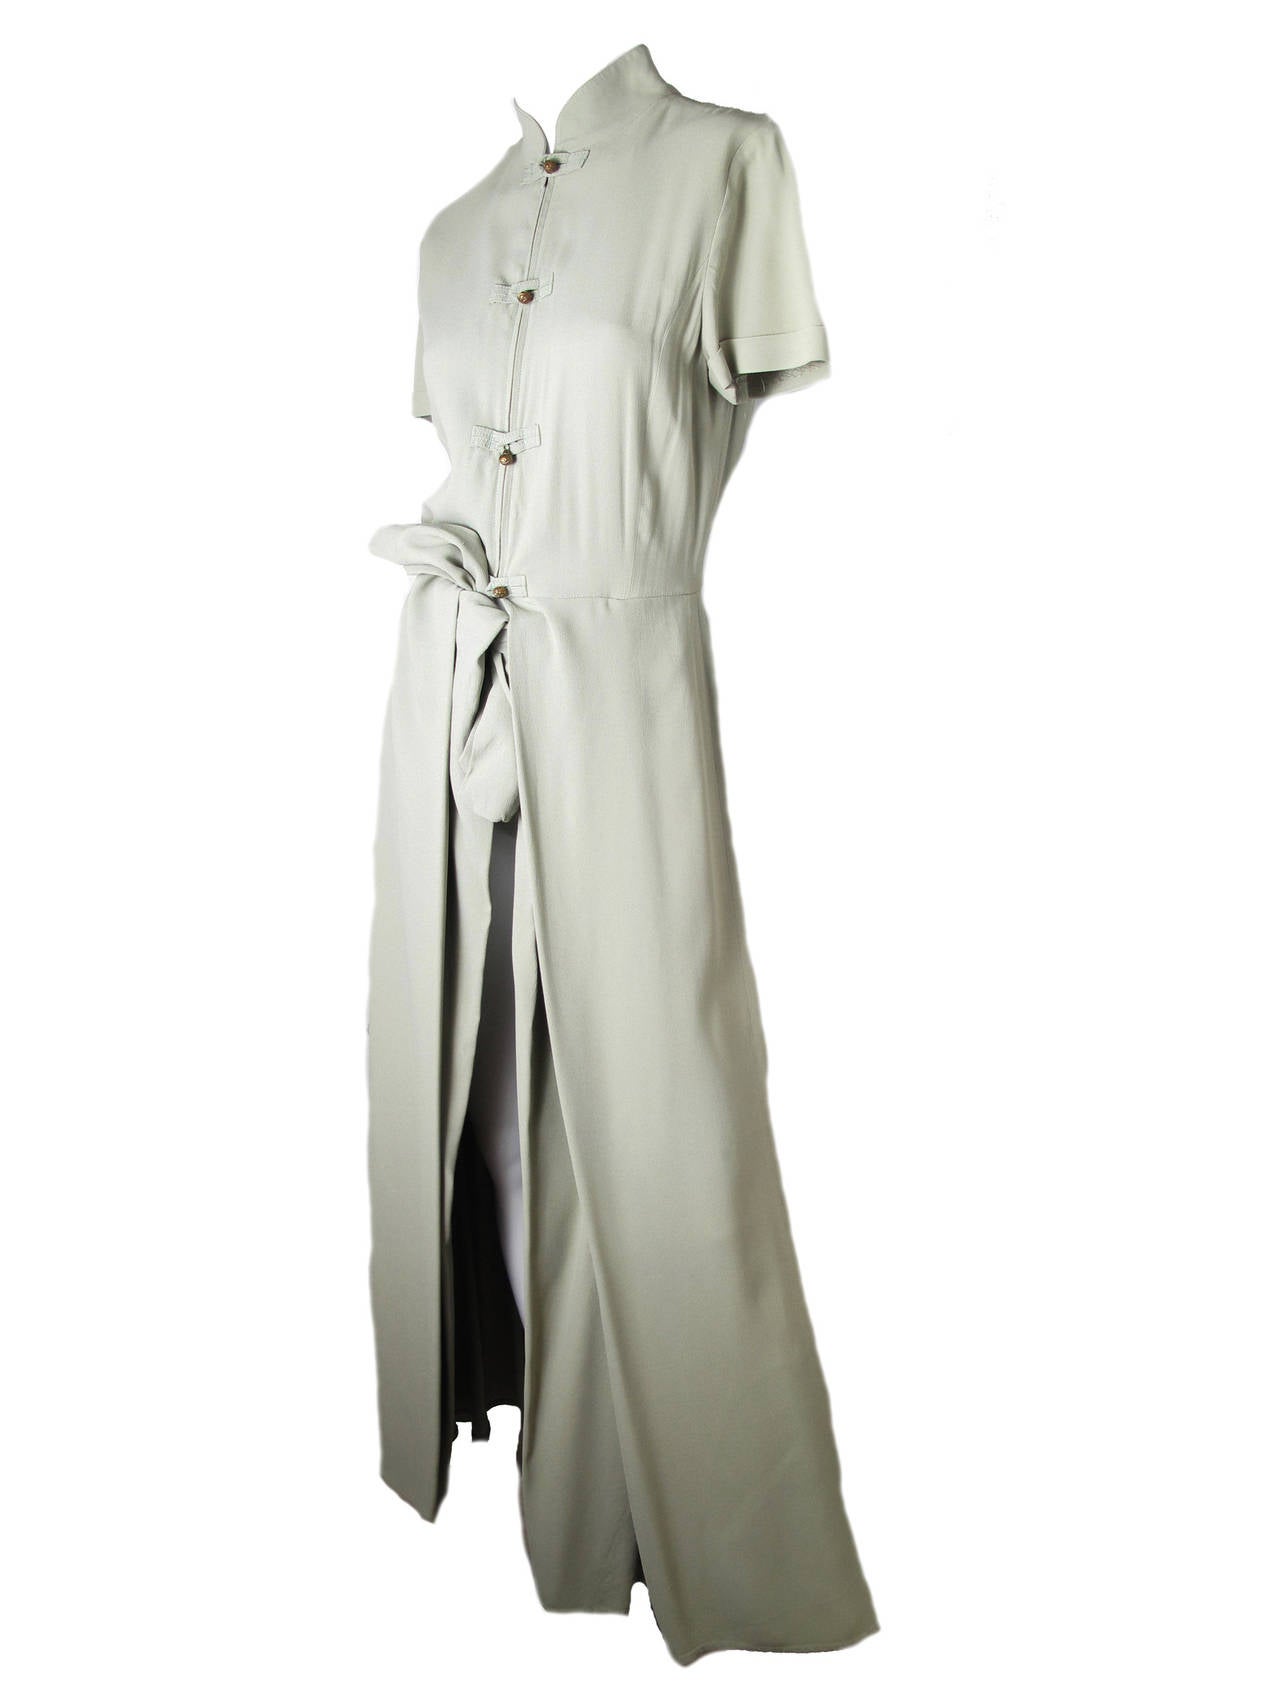 Jean Paul Gaultier green crepe evening gown.  35